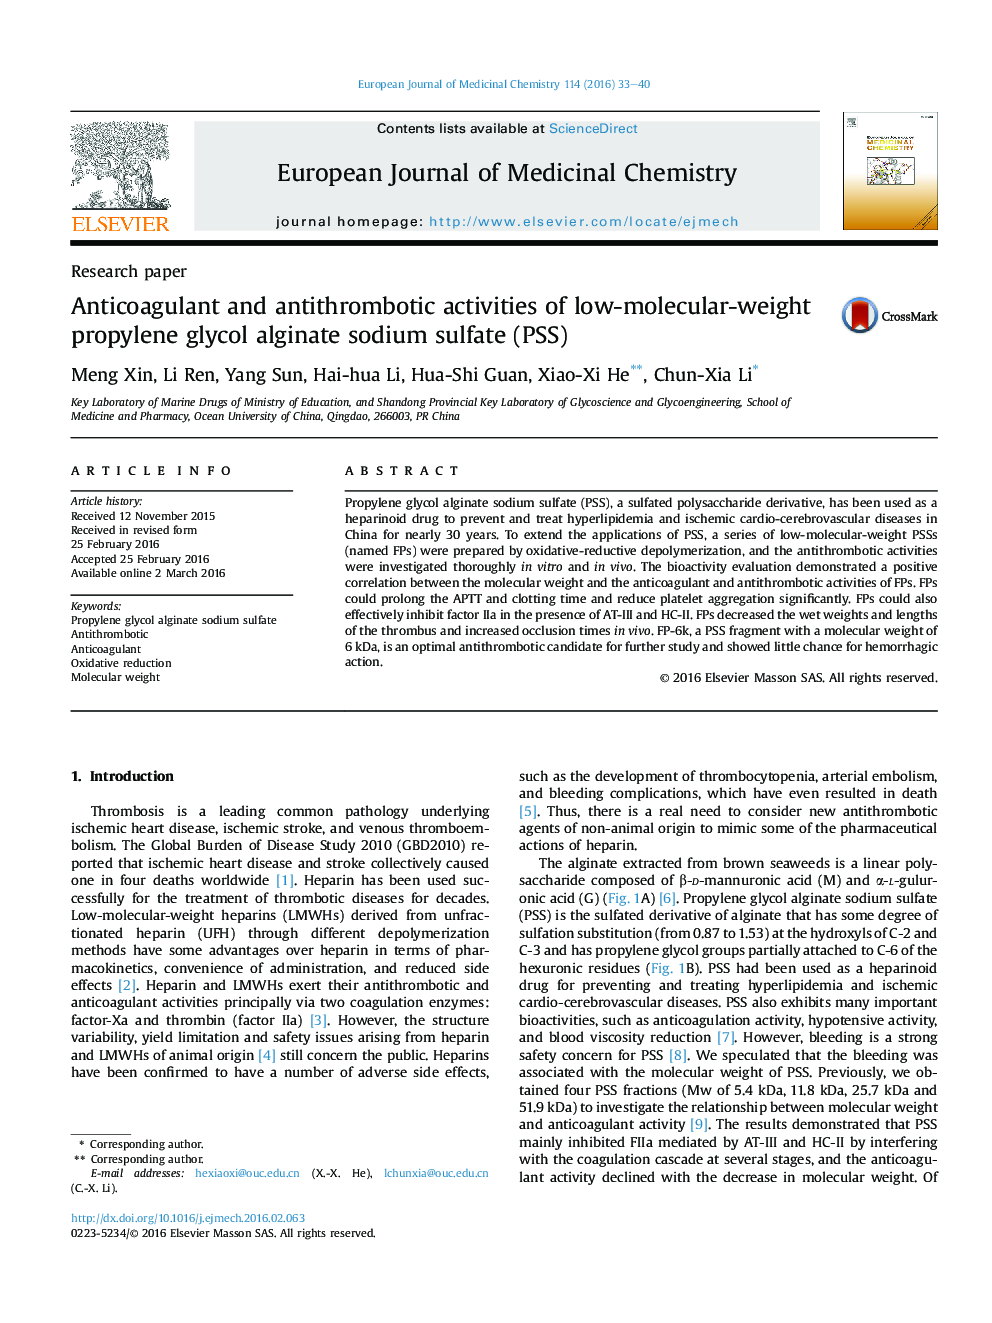 Anticoagulant and antithrombotic activities of low-molecular-weight propylene glycol alginate sodium sulfate (PSS)